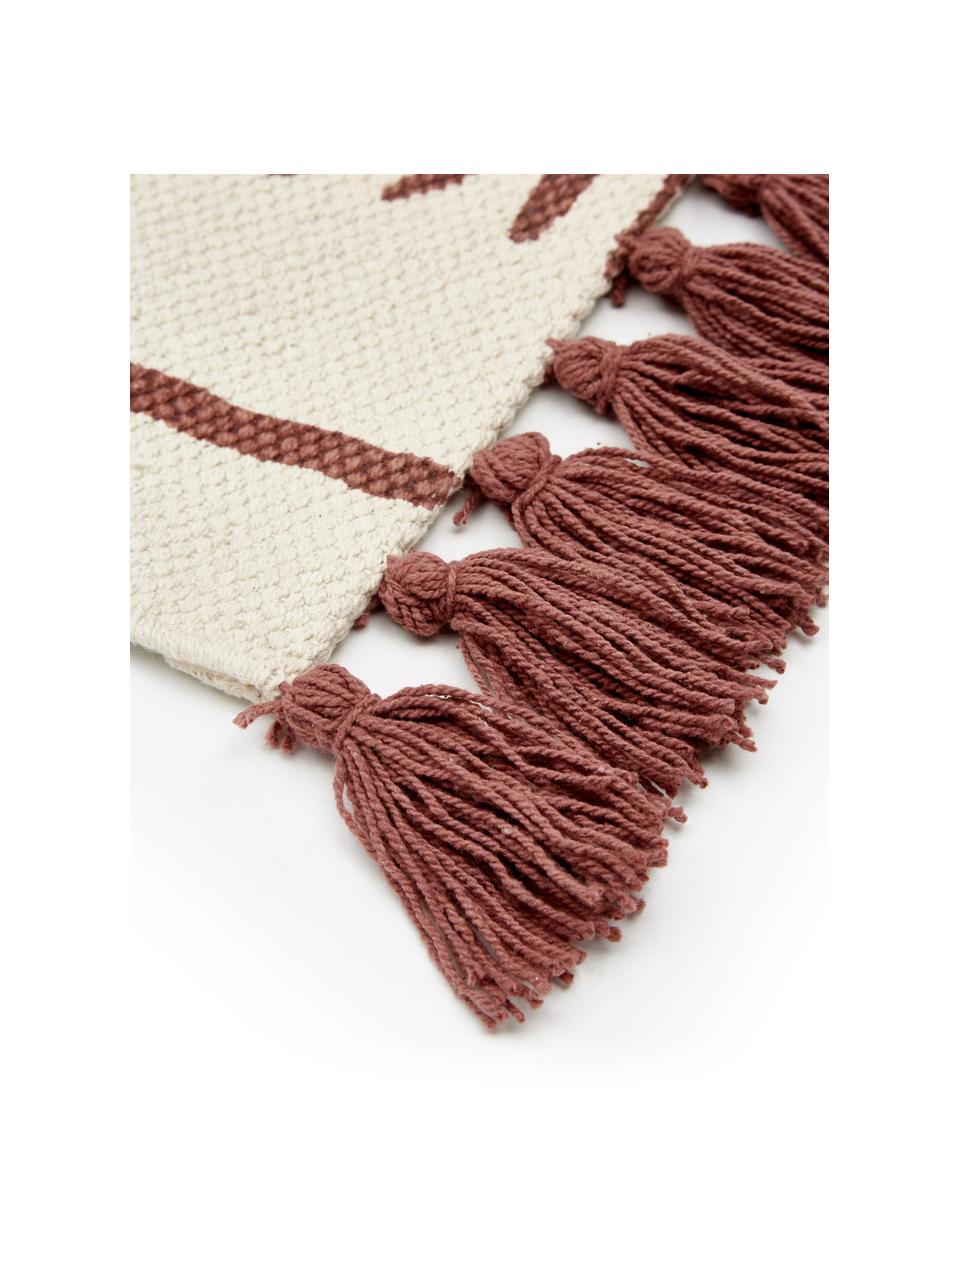 Handgewebter Baumwollläufer Rita in Beige/Terrakotta, Beige, Terrakotta, B 80 x L 250 cm